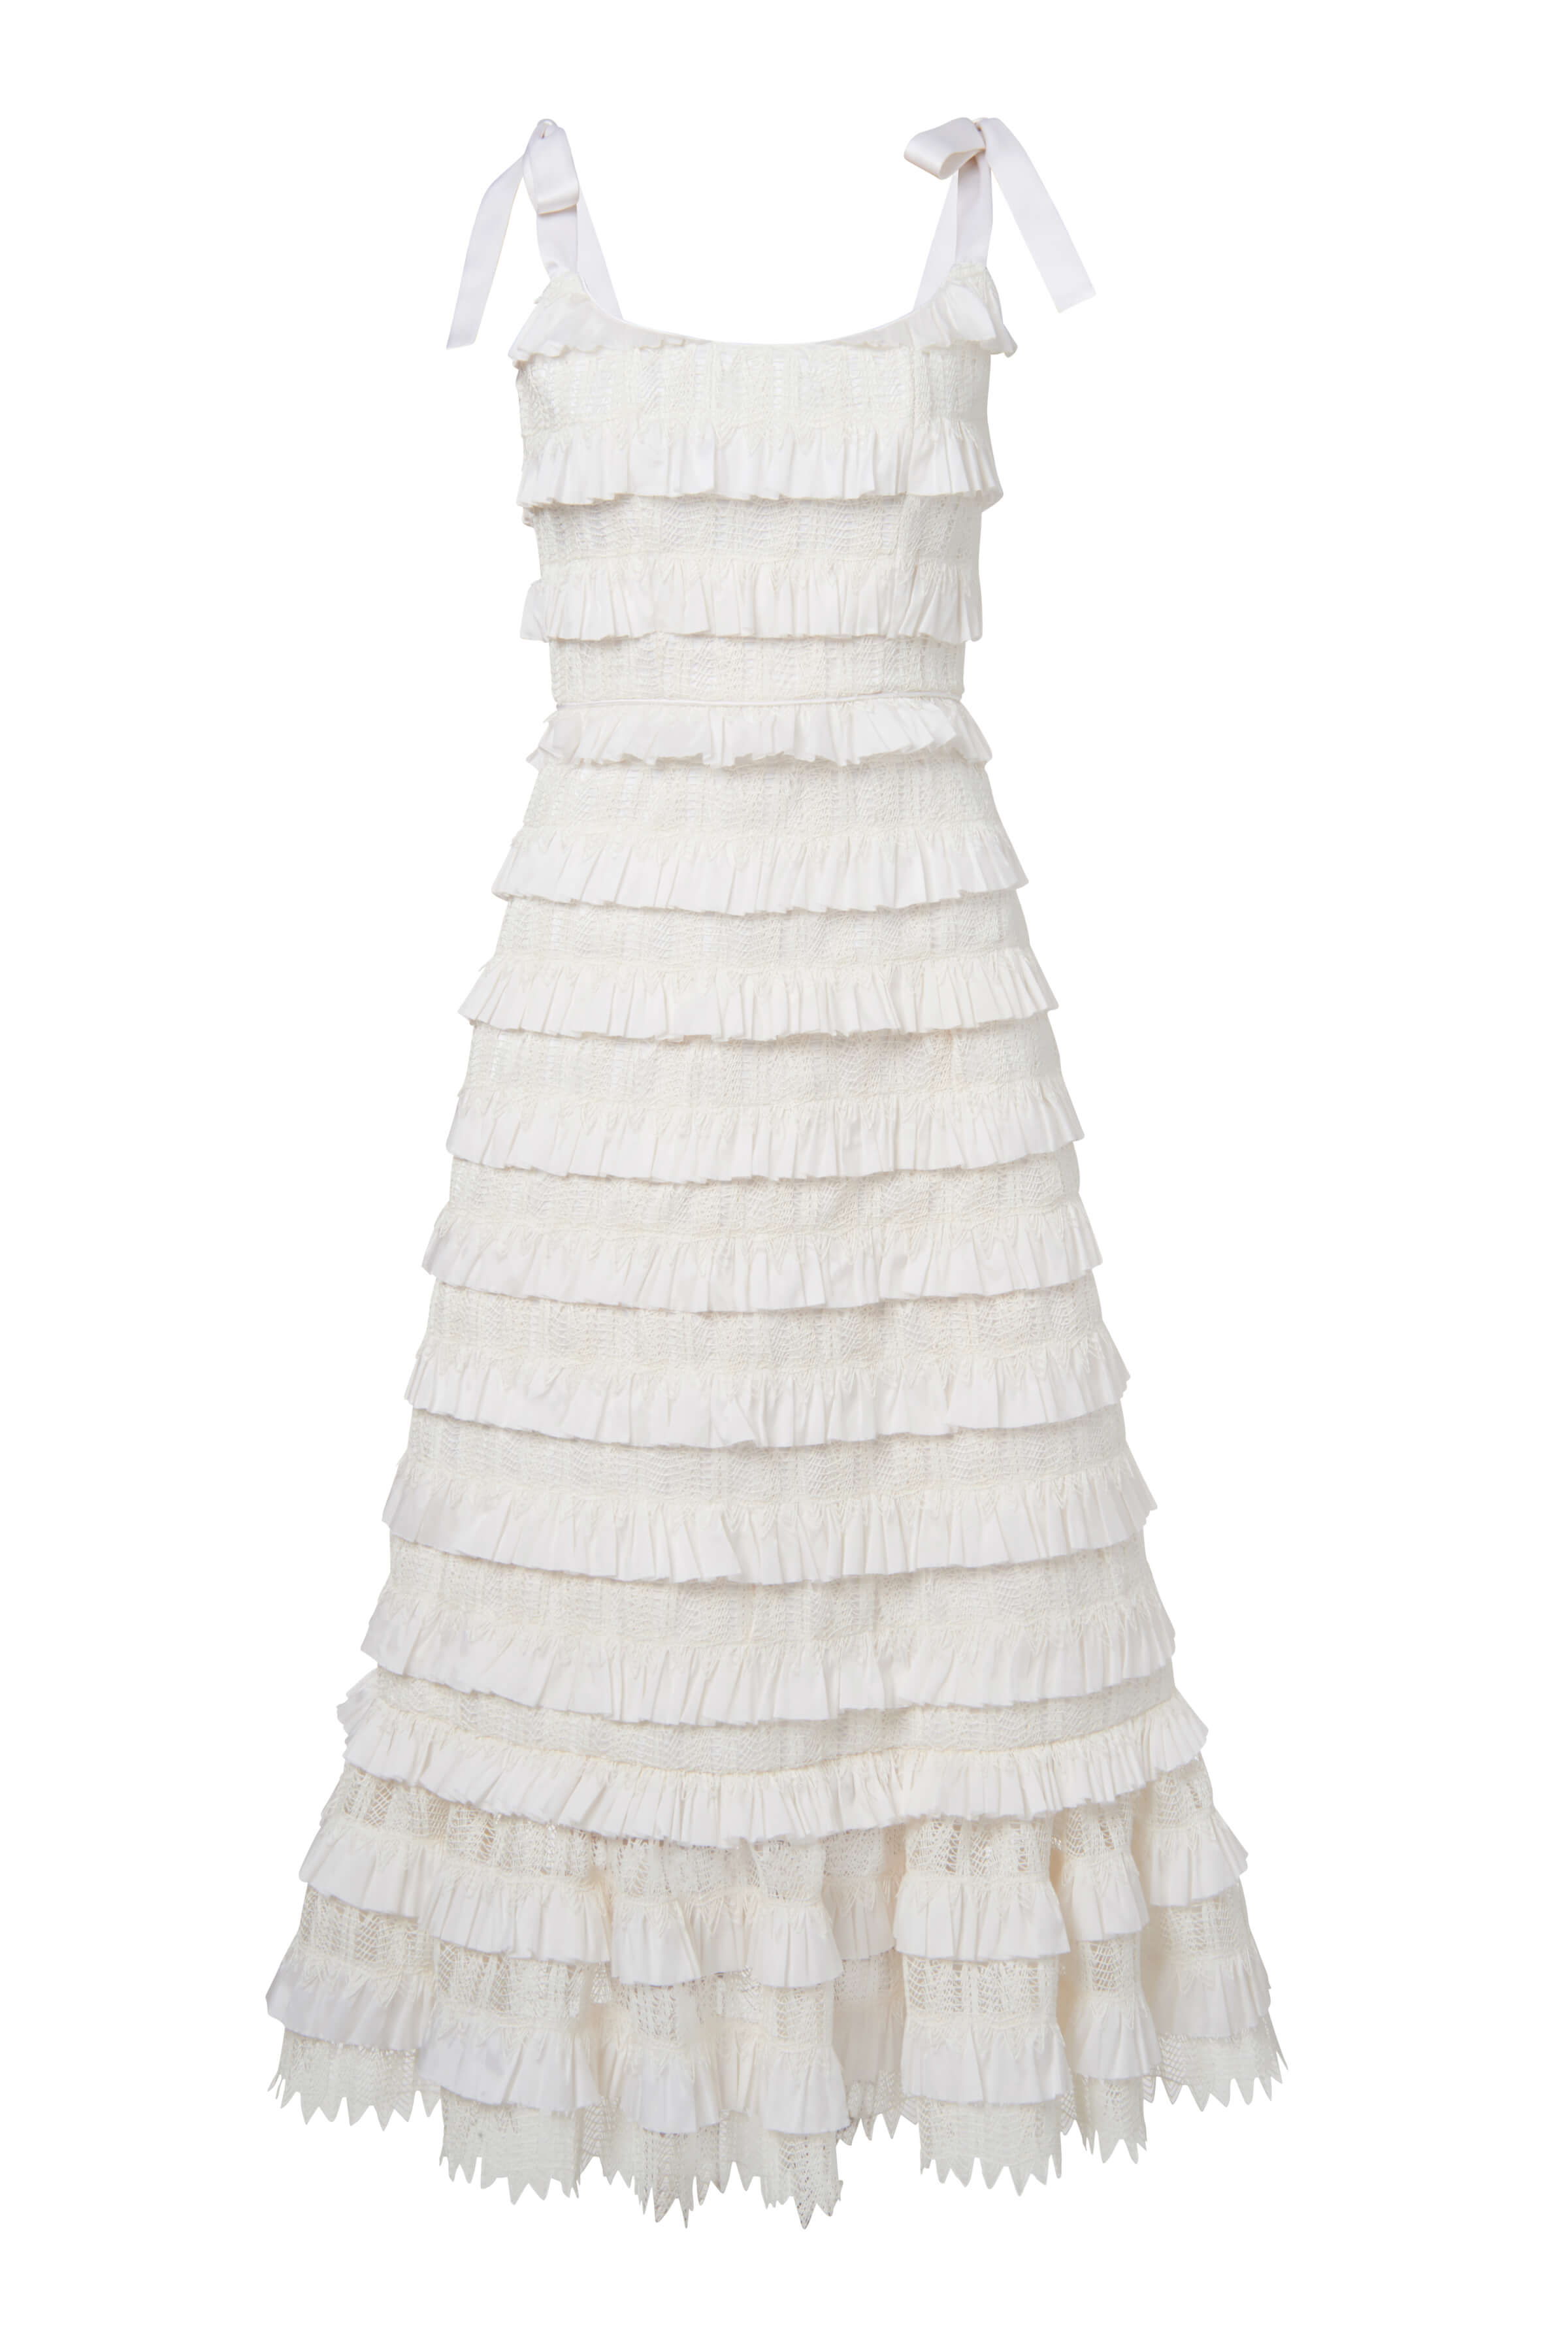 SHEIN Floral Print Bell Sleeve Layered Frill Dress | SHEIN USA